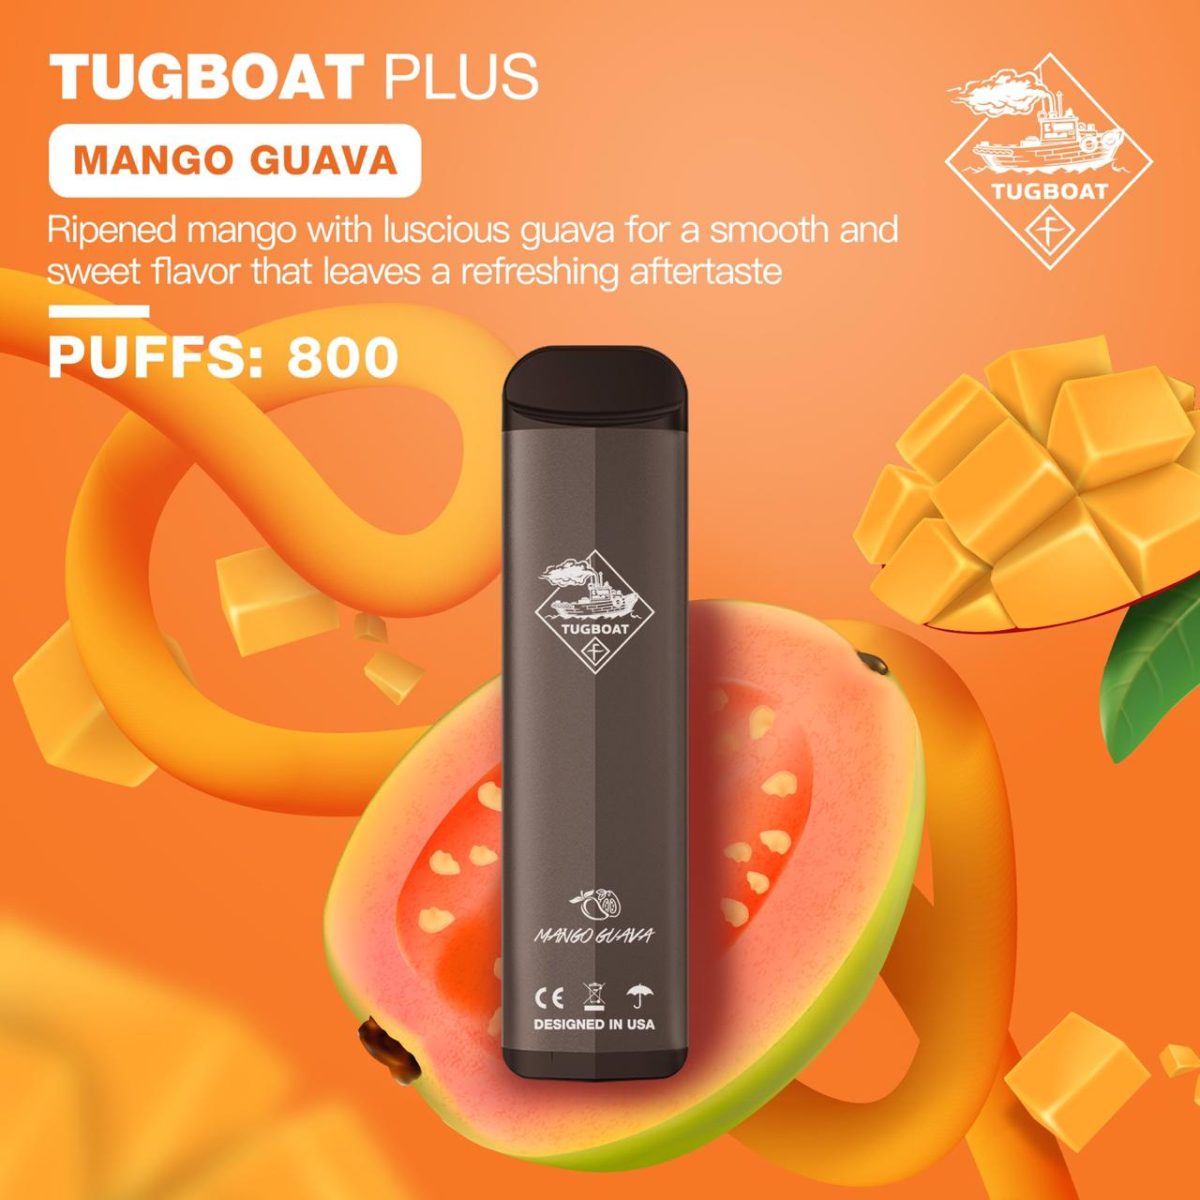 Tugboat Plus Mango Guava